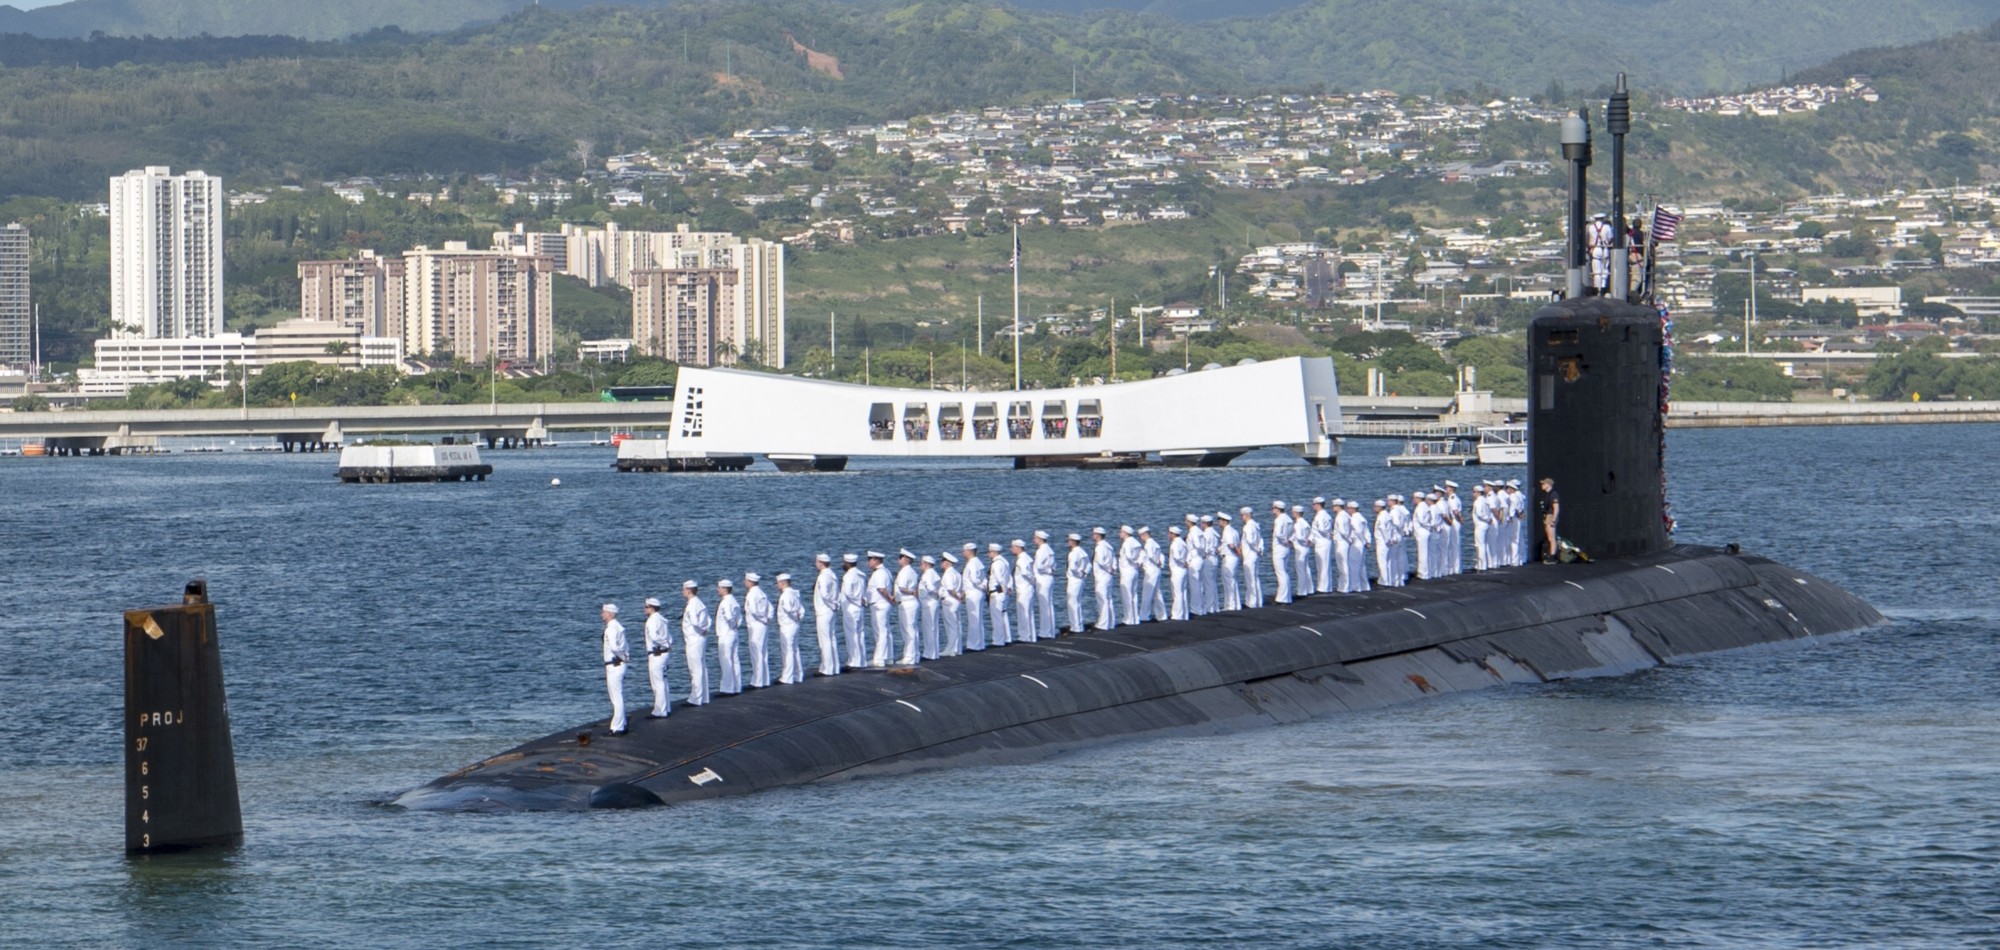 ssn-780 uss missouri virginia class attack submarine us navy 50